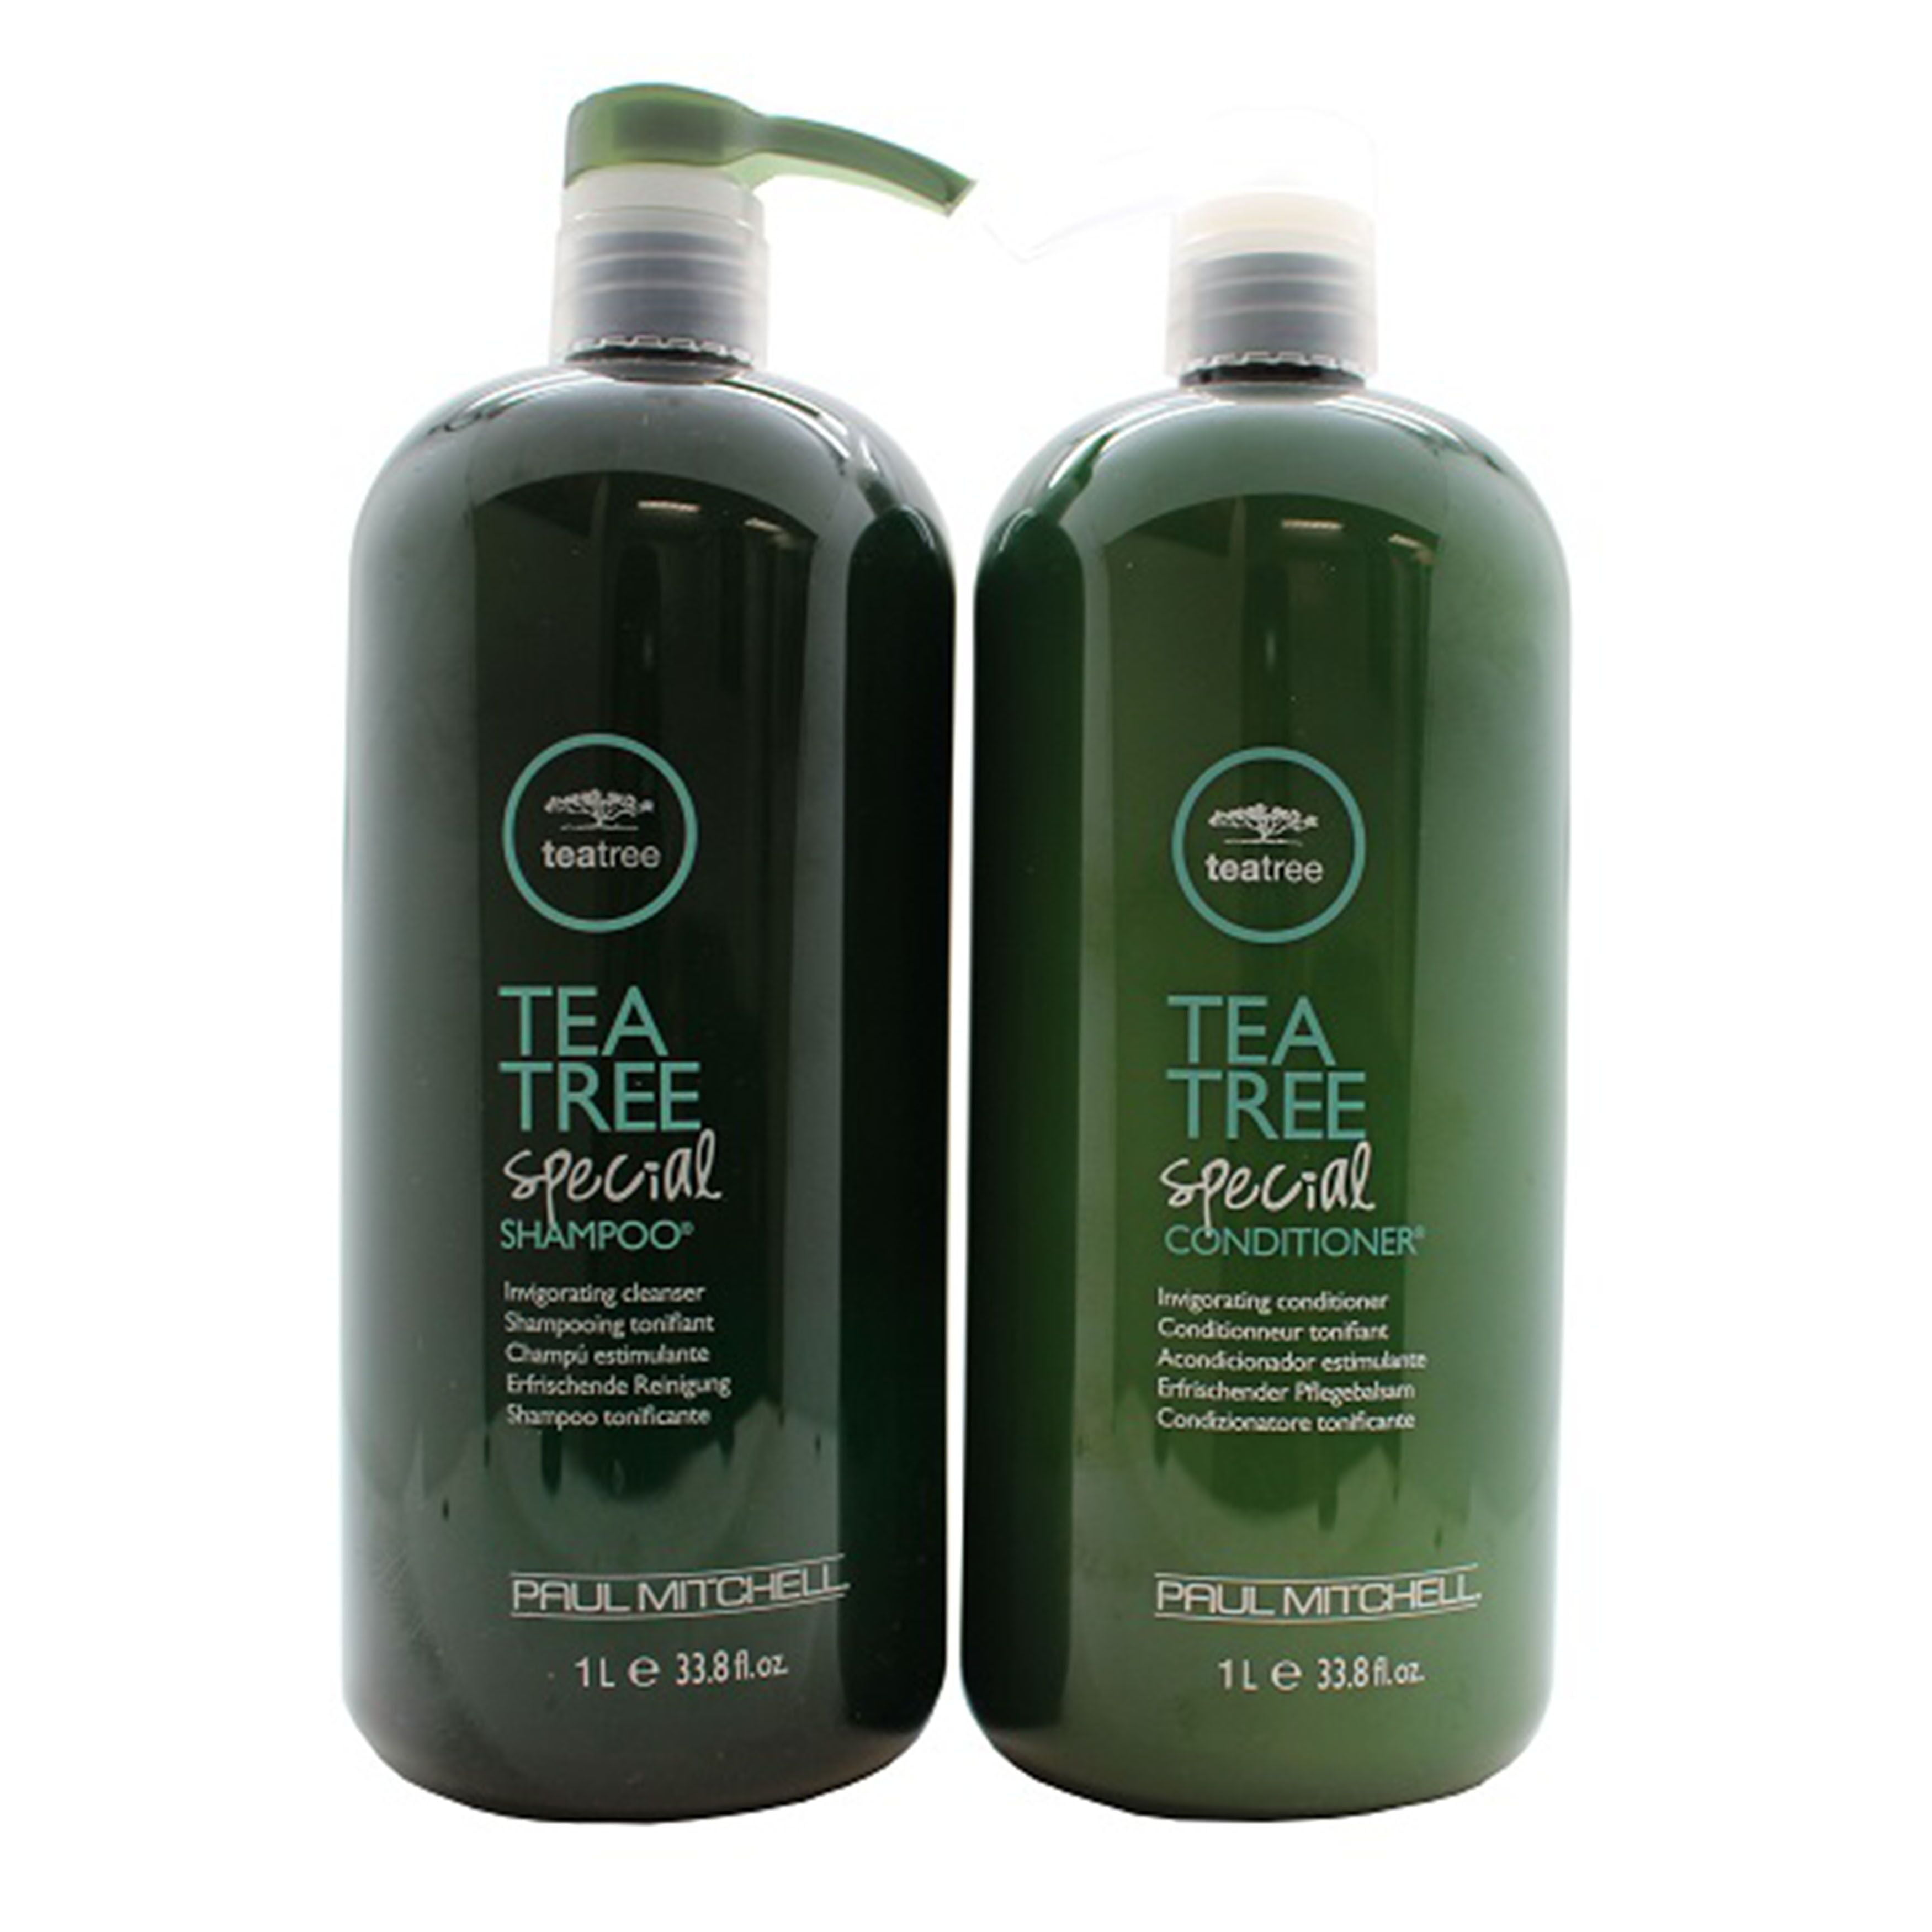 Paul Mitchell Tea Tree Special Shampoo &amp; Special Conditioner 1 Liter/33.8oz DUO - Walmart.com